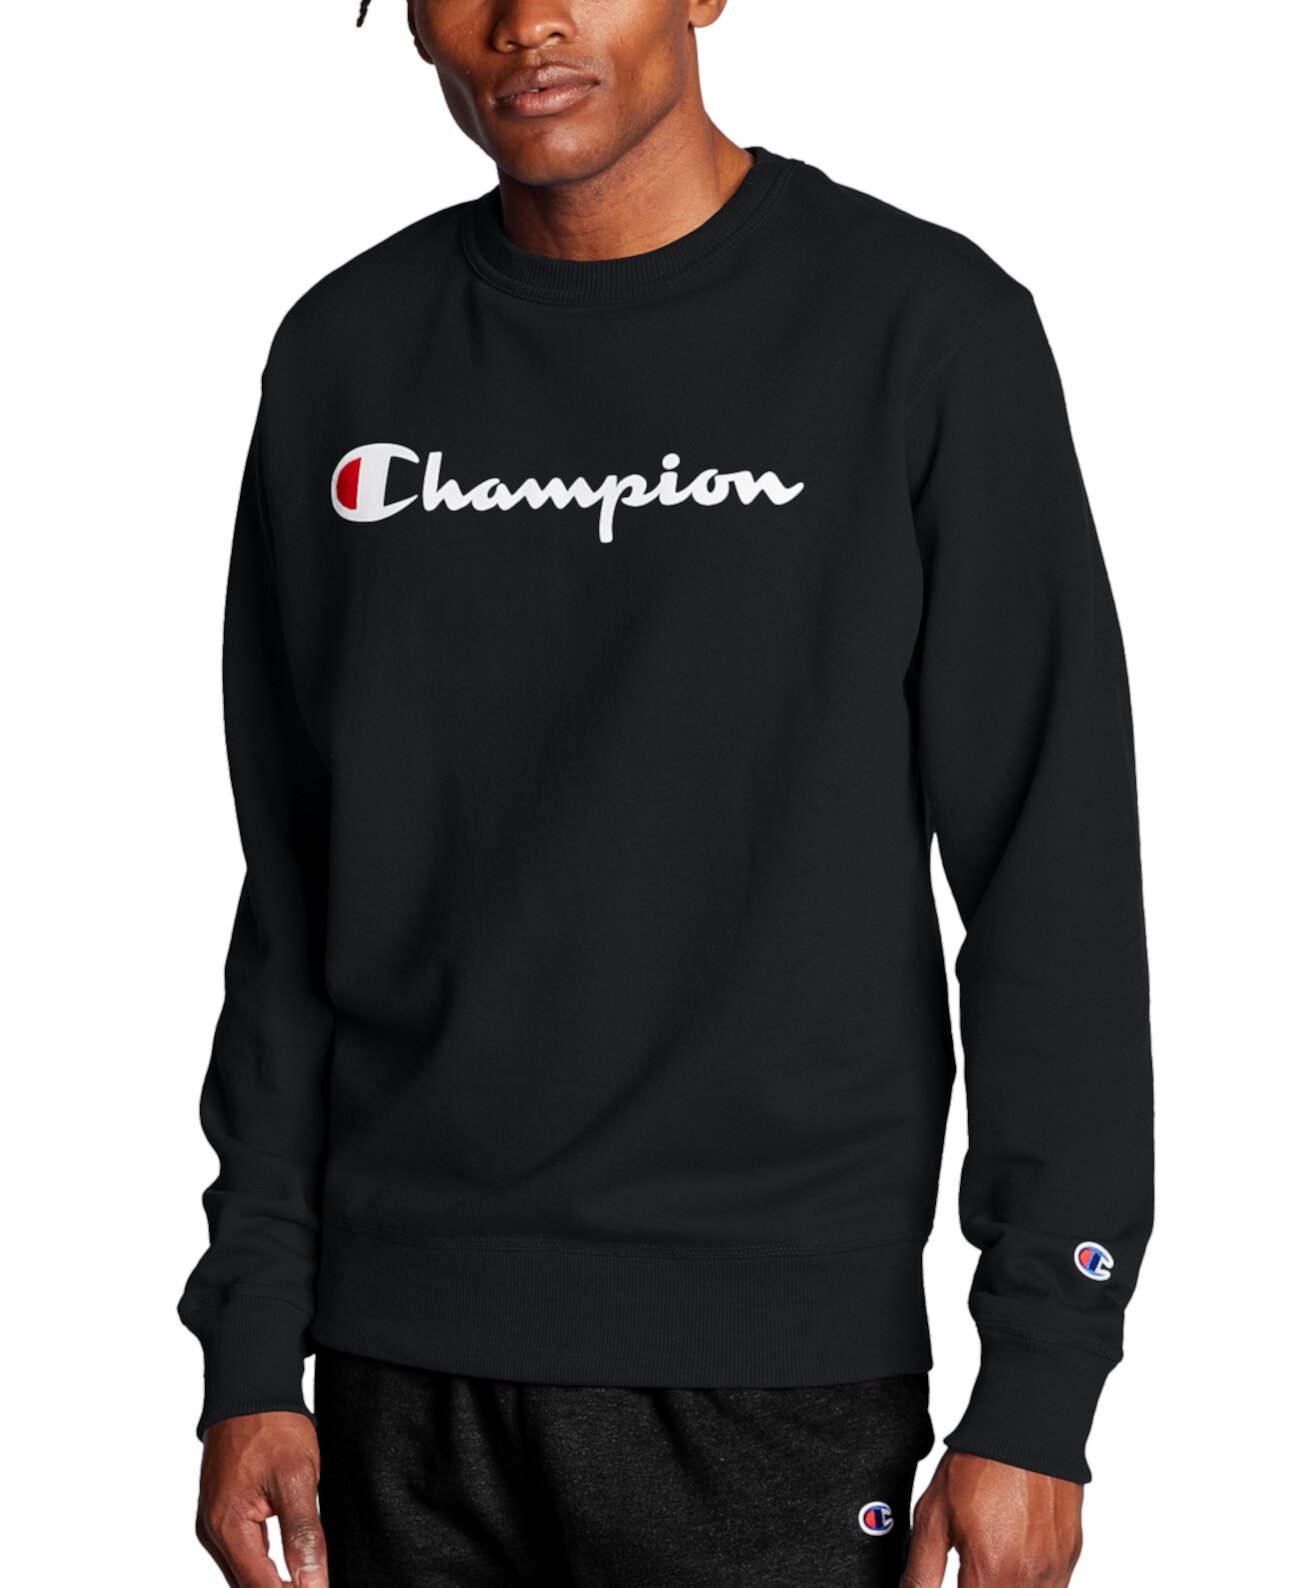 Мужской свитер с логотипом Champion Champion